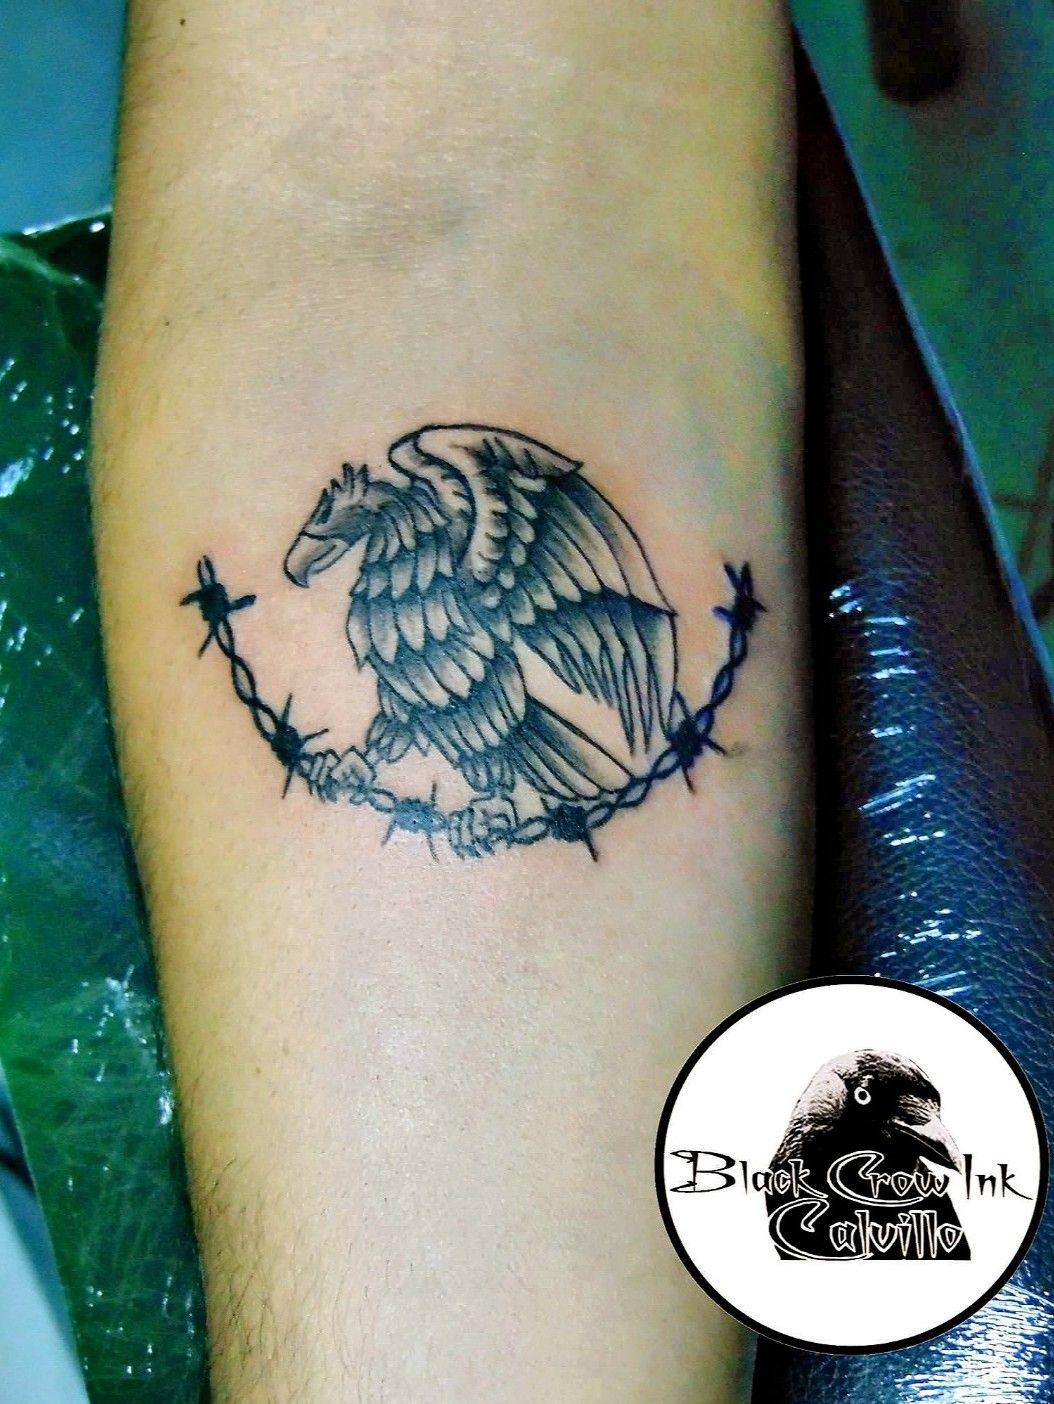 Tattoo uploaded by Jose Black Crow. • Aguila mexicana. #eagle • Tattoodo